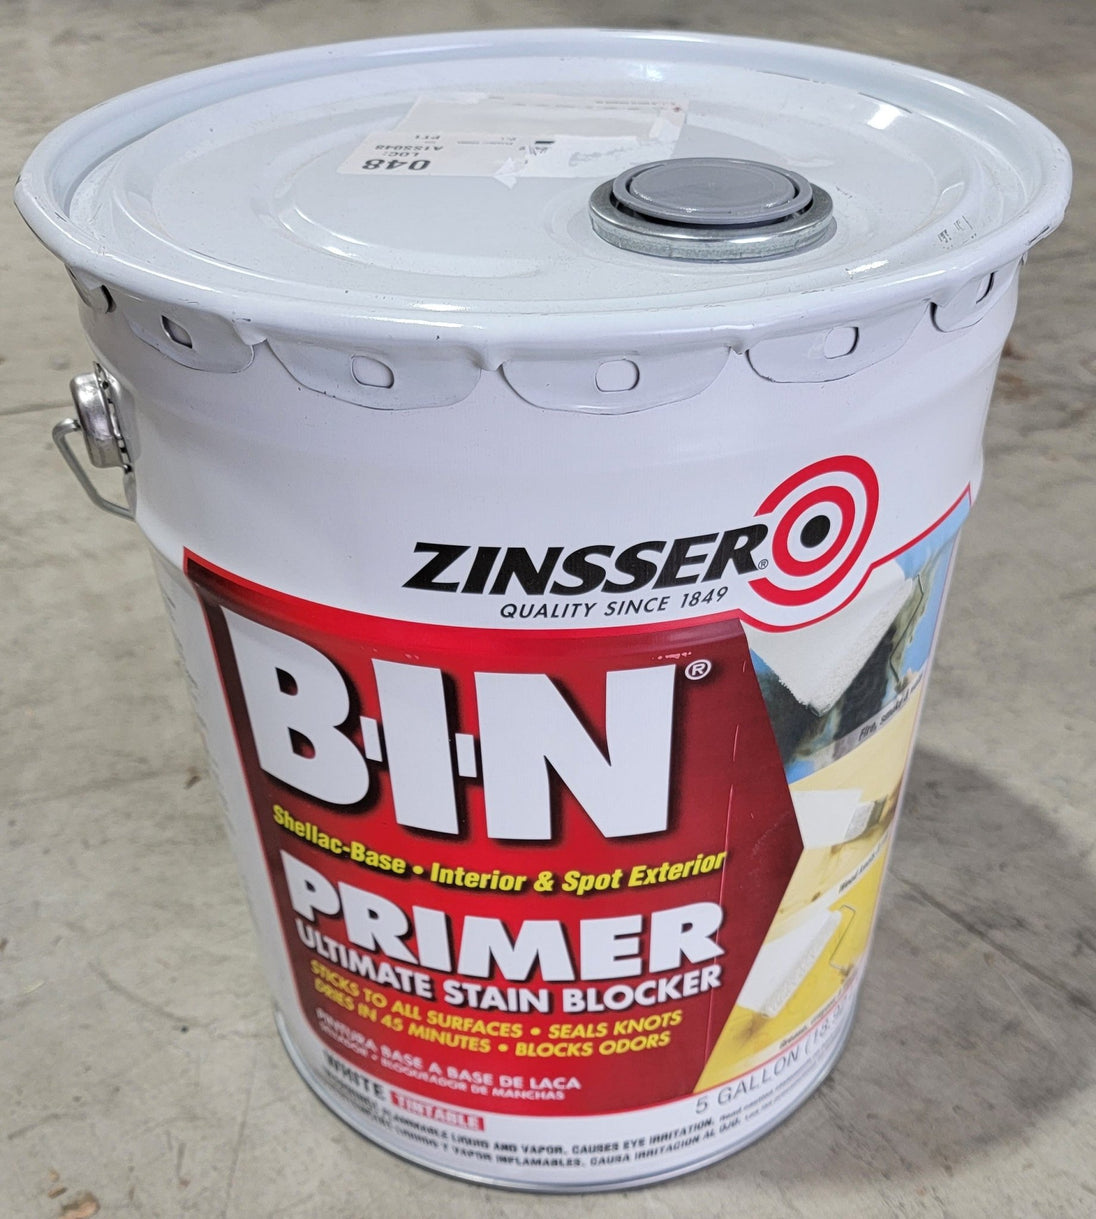 Zinsser 5 gal. B-I-N Shellac Based White Interior Primer and Sealer - resaled - Zinsser - 047719009009